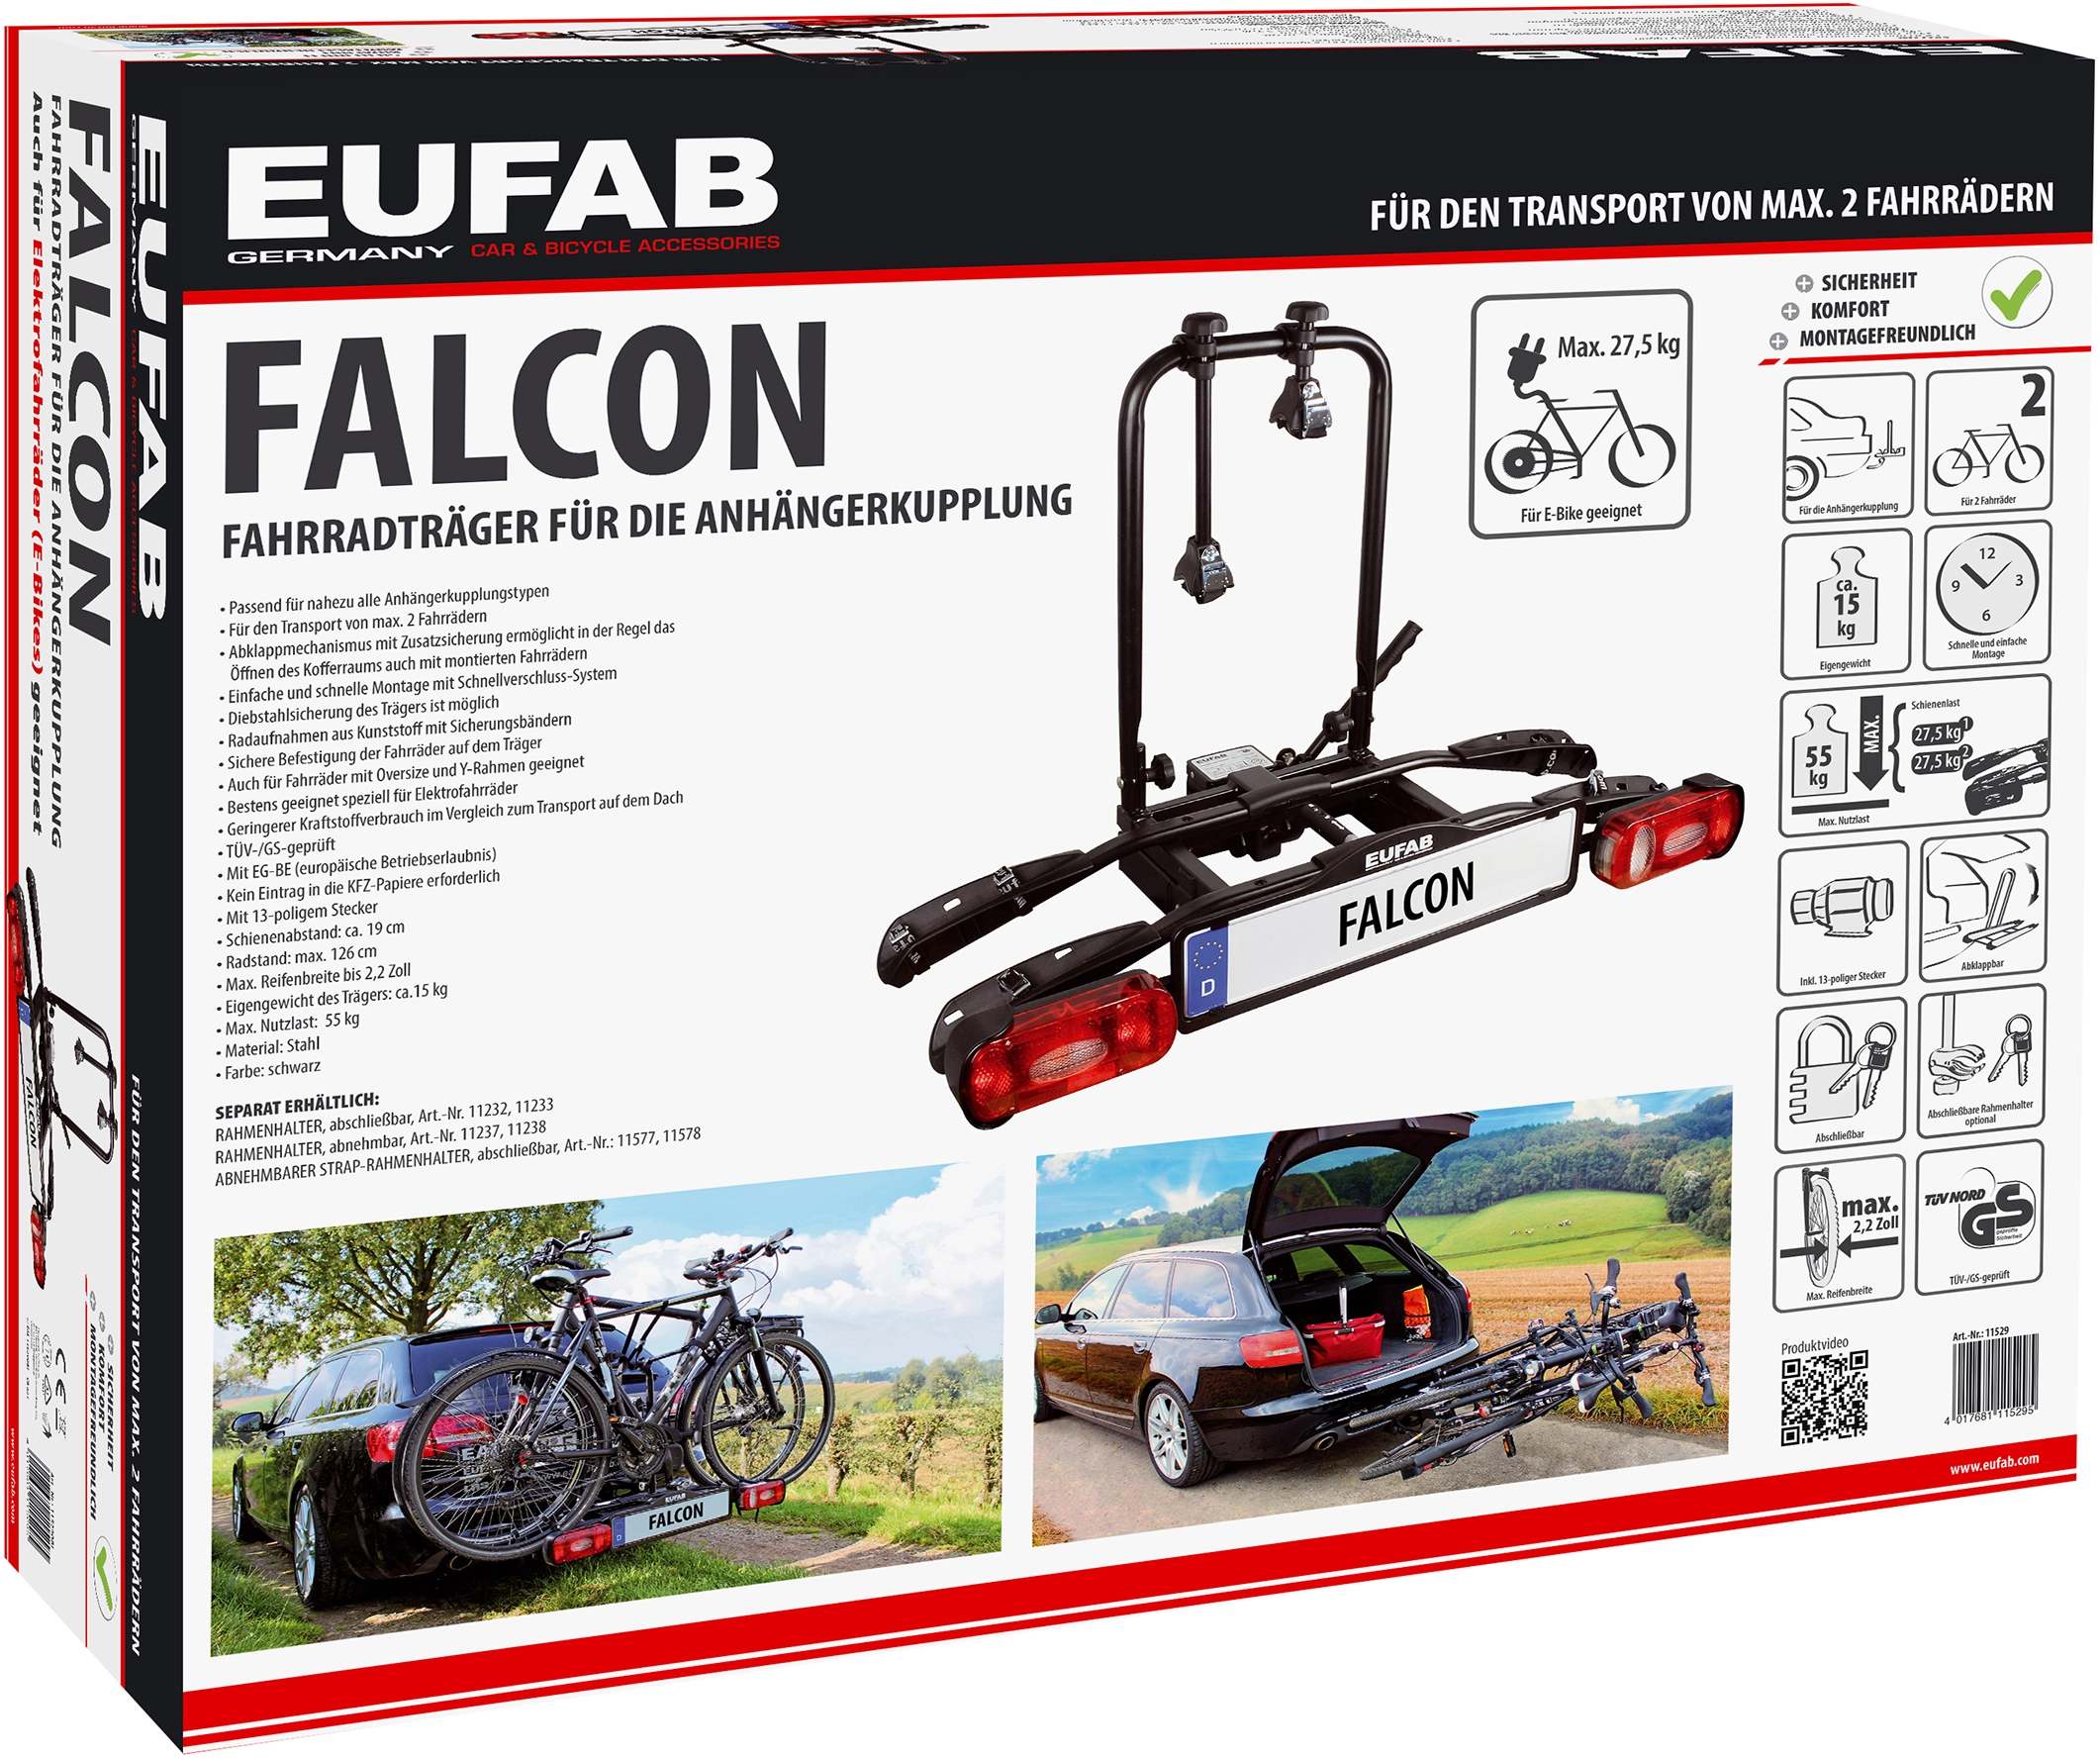 Fahrrad-Kupplungsträger OBI Falcon kaufen bei Eufab